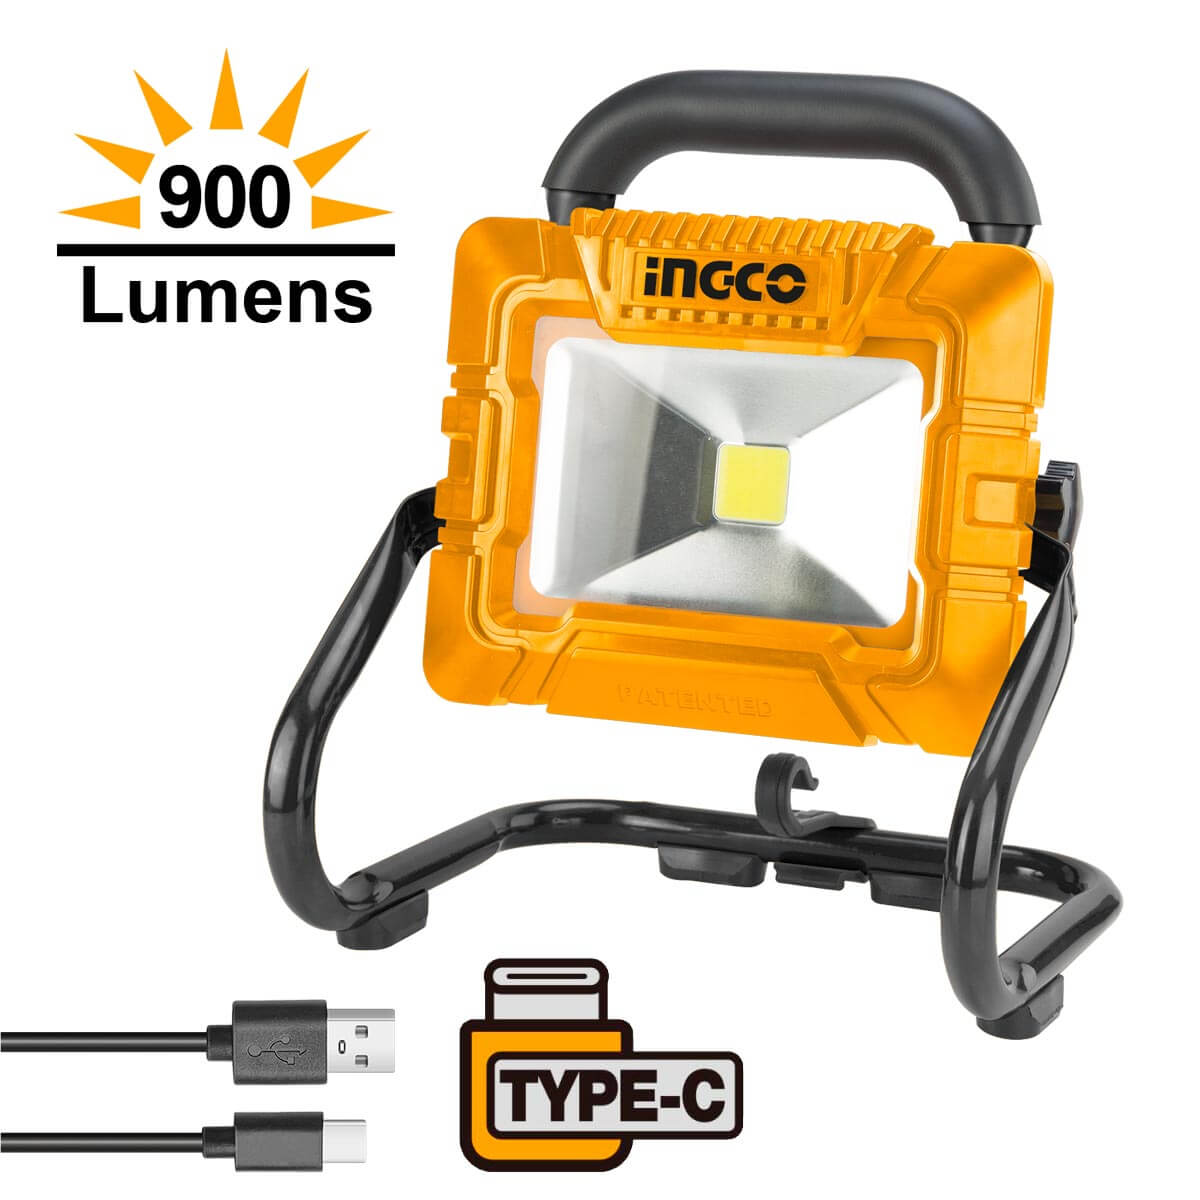 INGCO Προβολέας με Ενσωματομένη Μπαταρία 3.6V +Καλώδιο USB Type-C 500-900 lumen (HRLF4415)